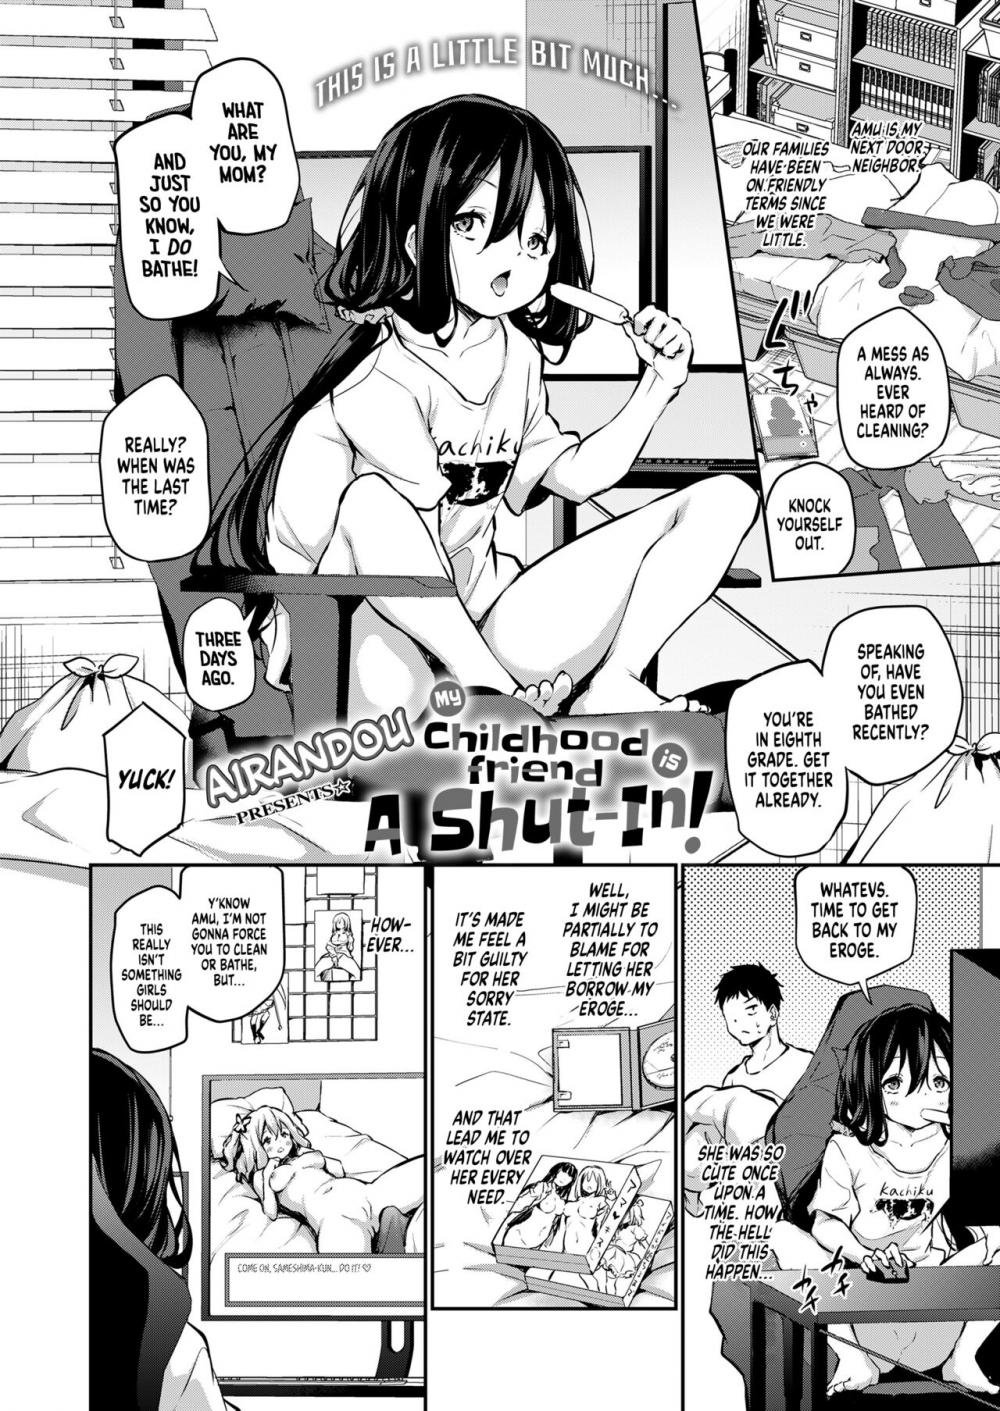 Hentai Manga Comic-My Childhood Friend Is A Shut-In-v22m-v22m-v22m-Read-2